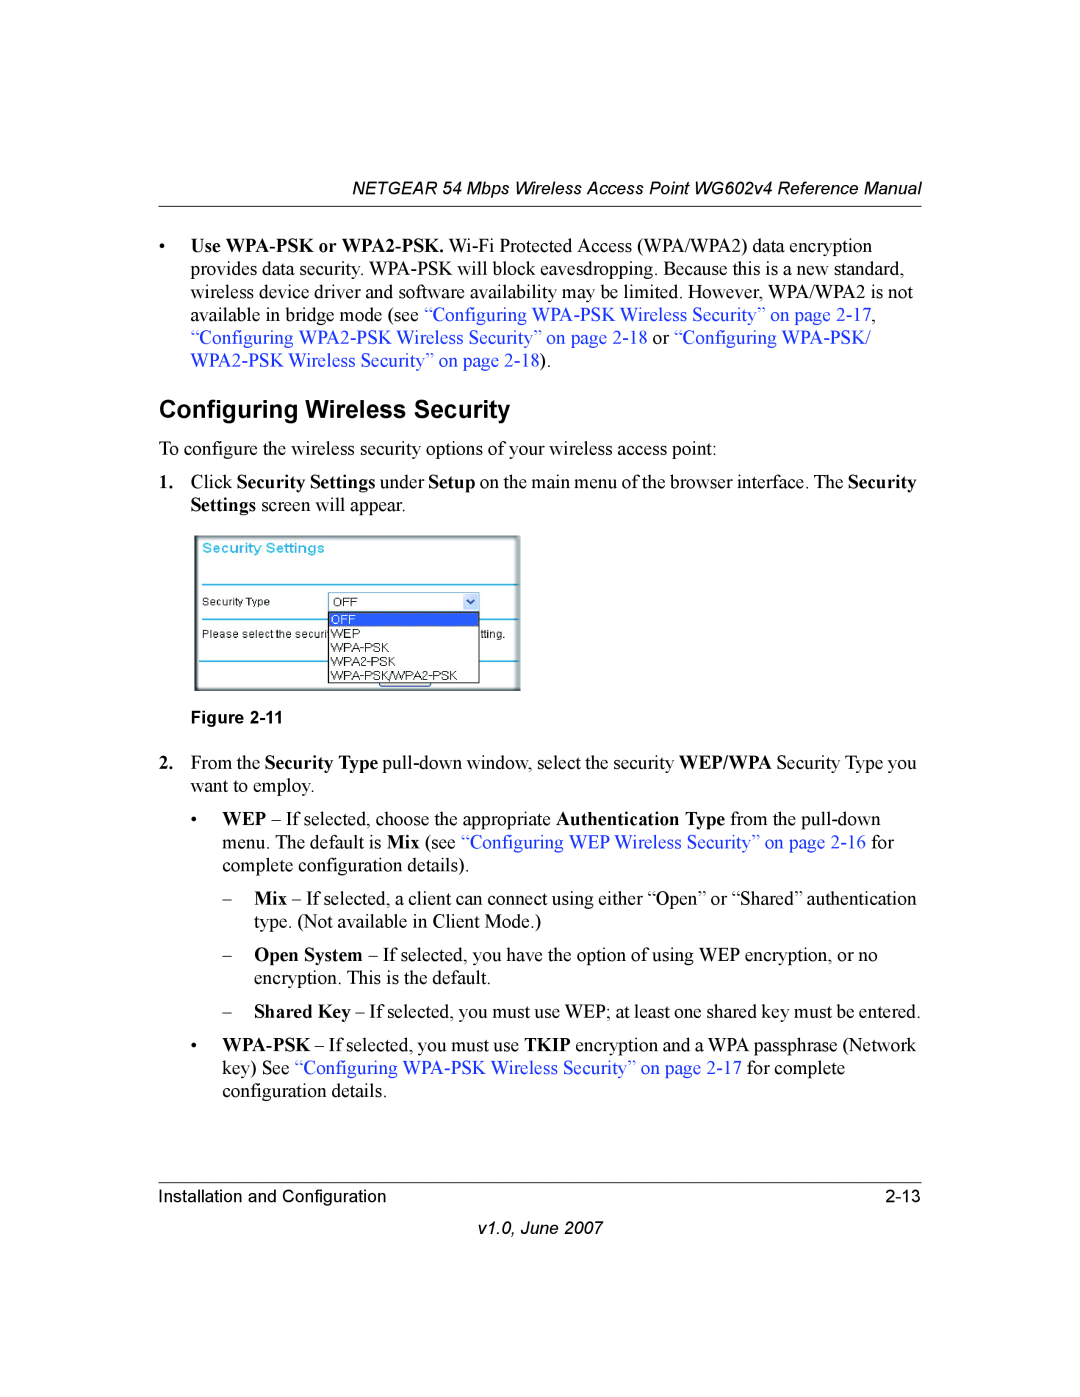 NETGEAR WG602V4 manual Configuring Wireless Security 